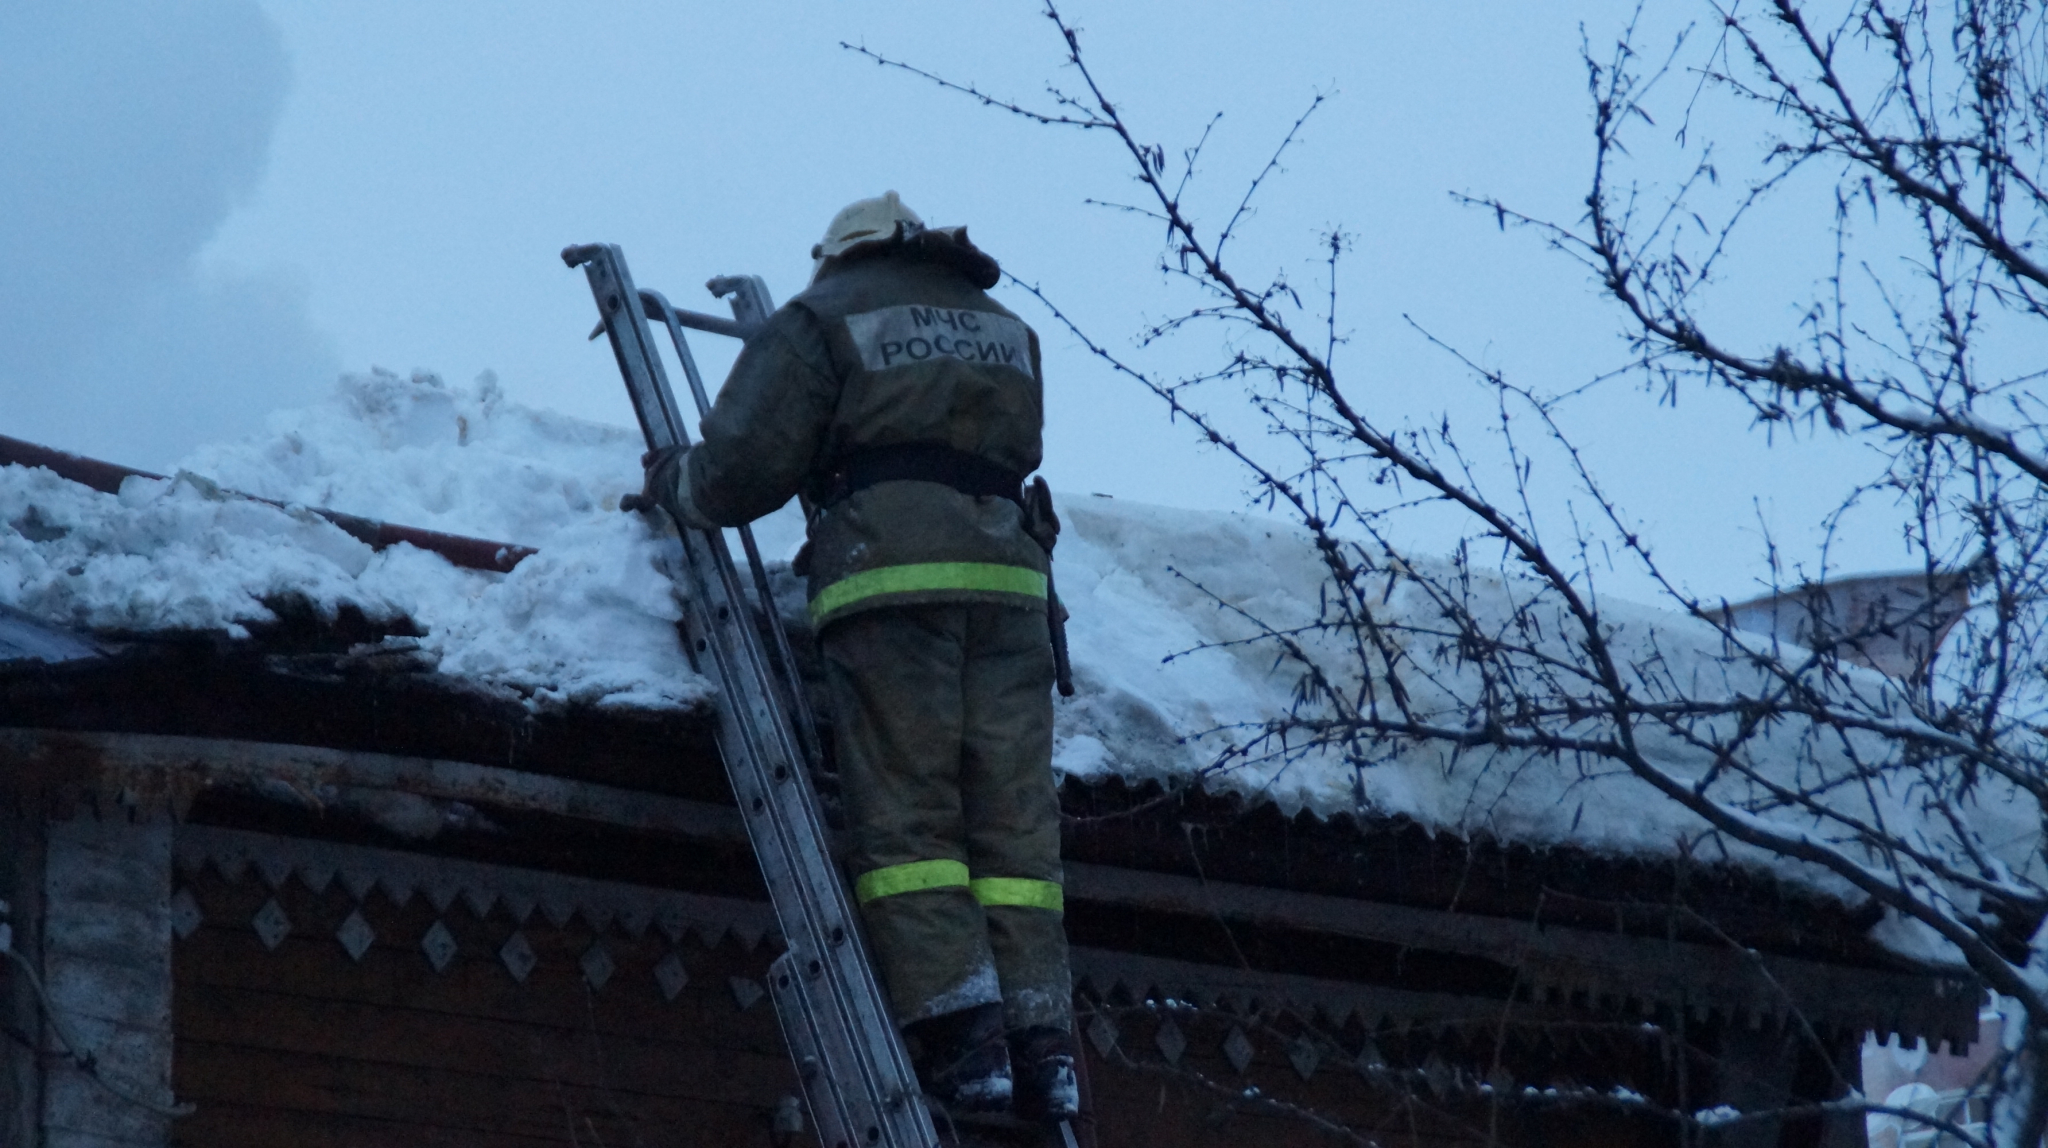 В Мордовии погиб мужчина при пожаре в жилом доме